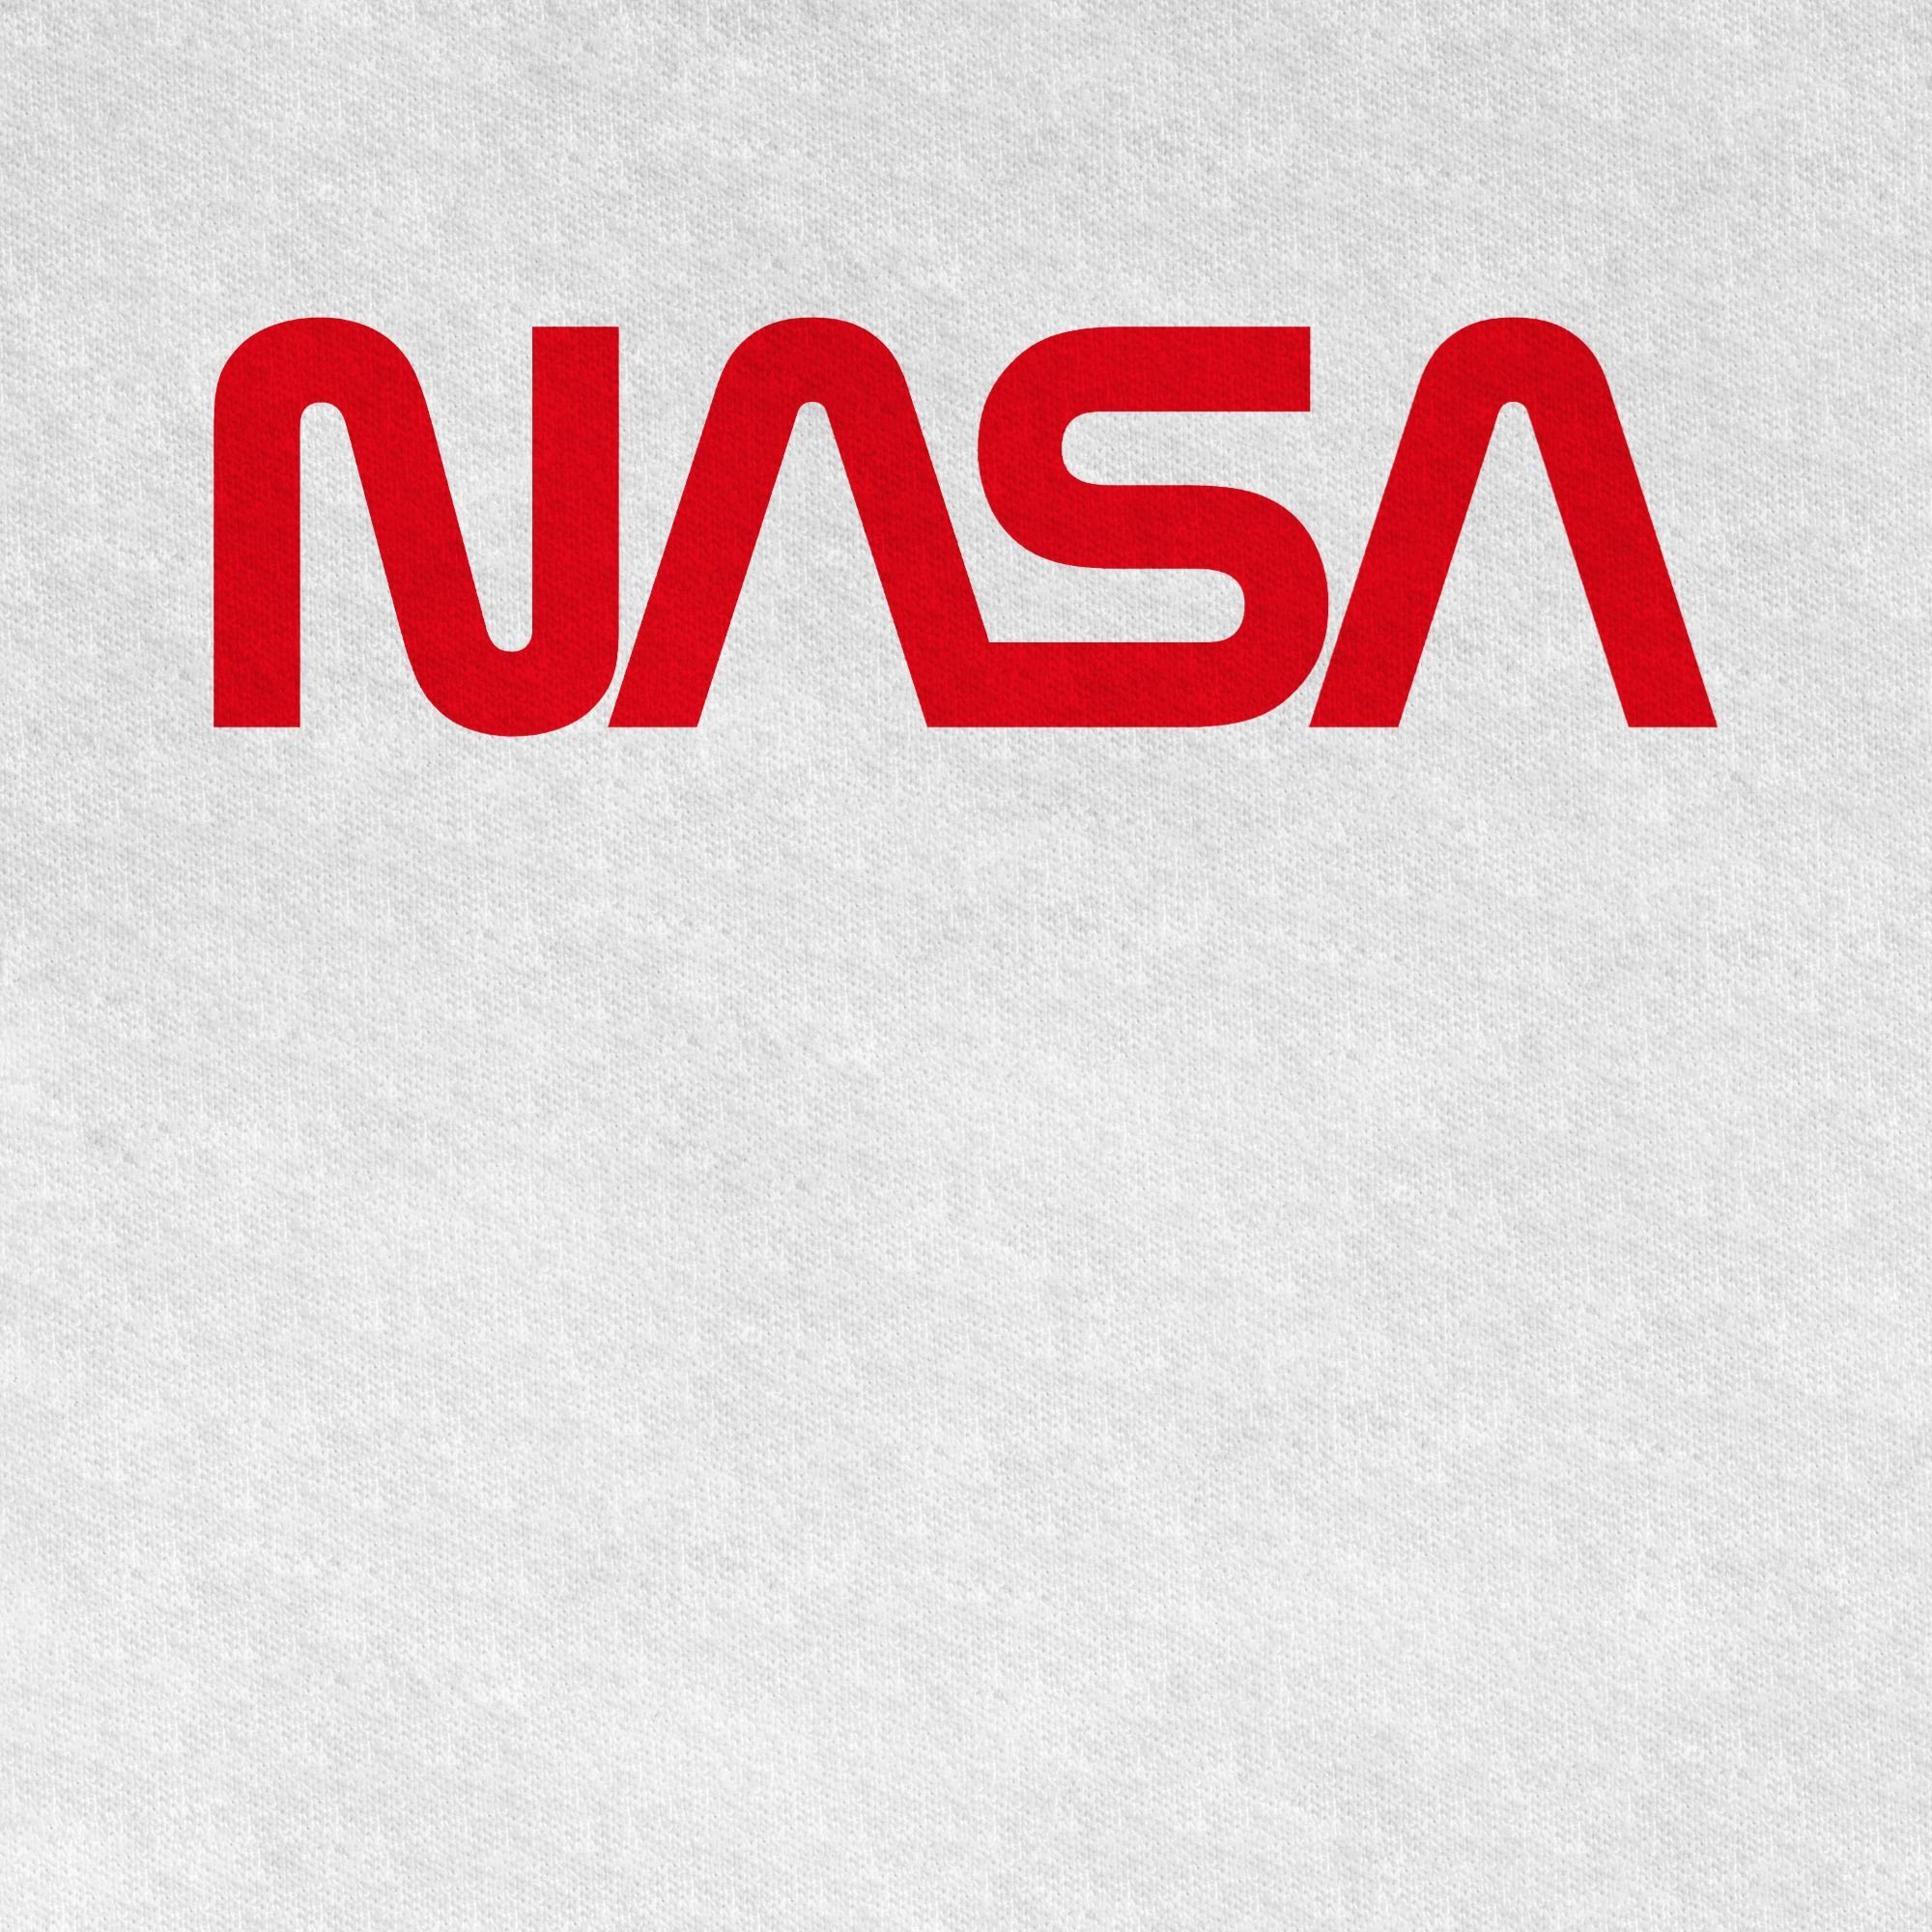 und Co Mondlandung Raumfahrt Nasa Astronaut T-Shirt Weltraum Shirtracer Weiß 3 - Kinderkleidung